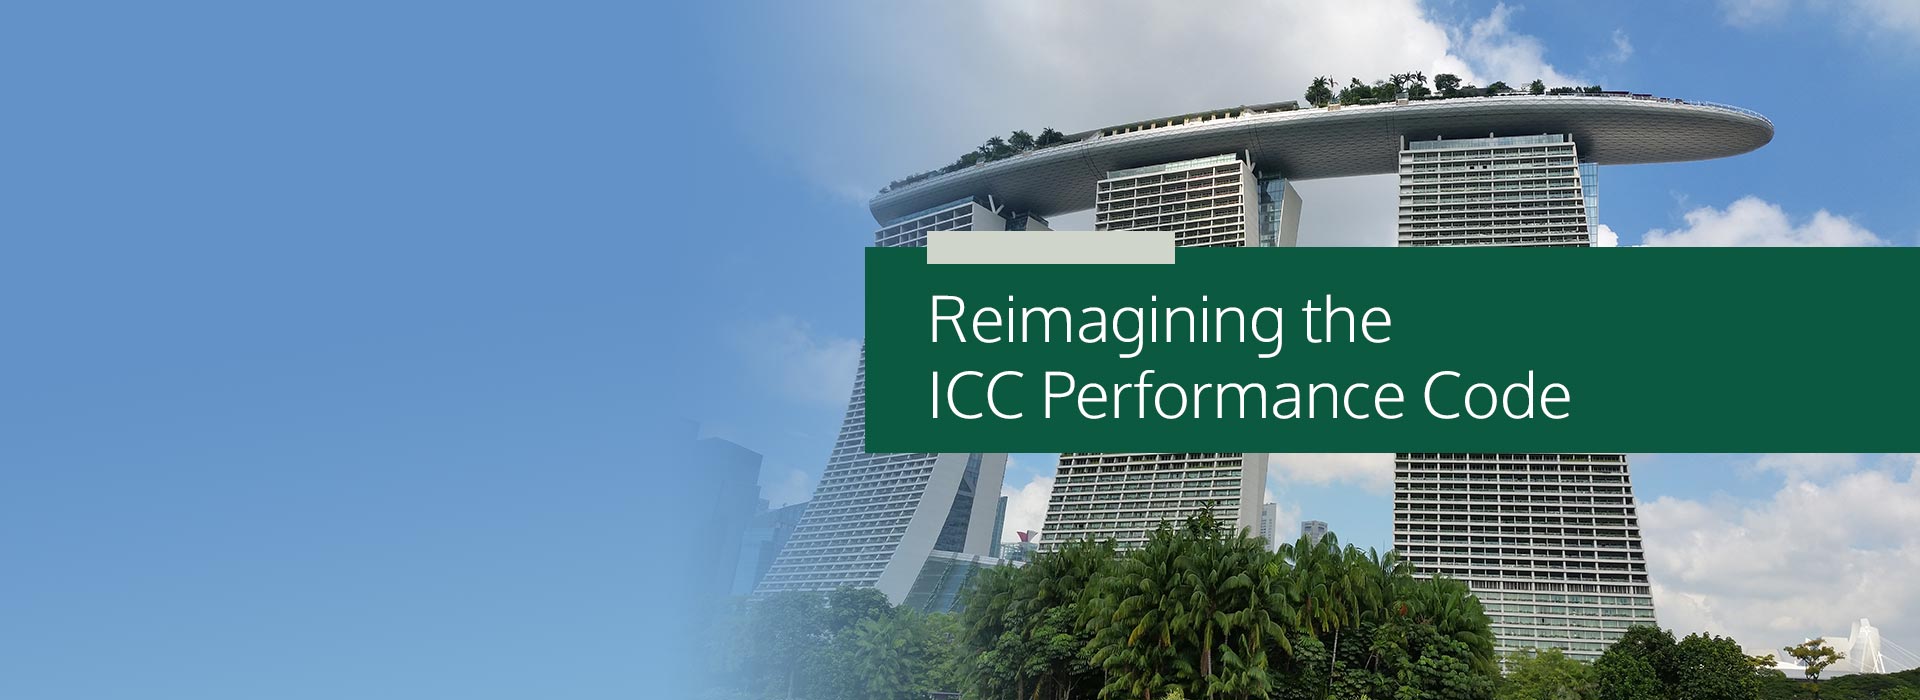 ICC Performance Code Resources